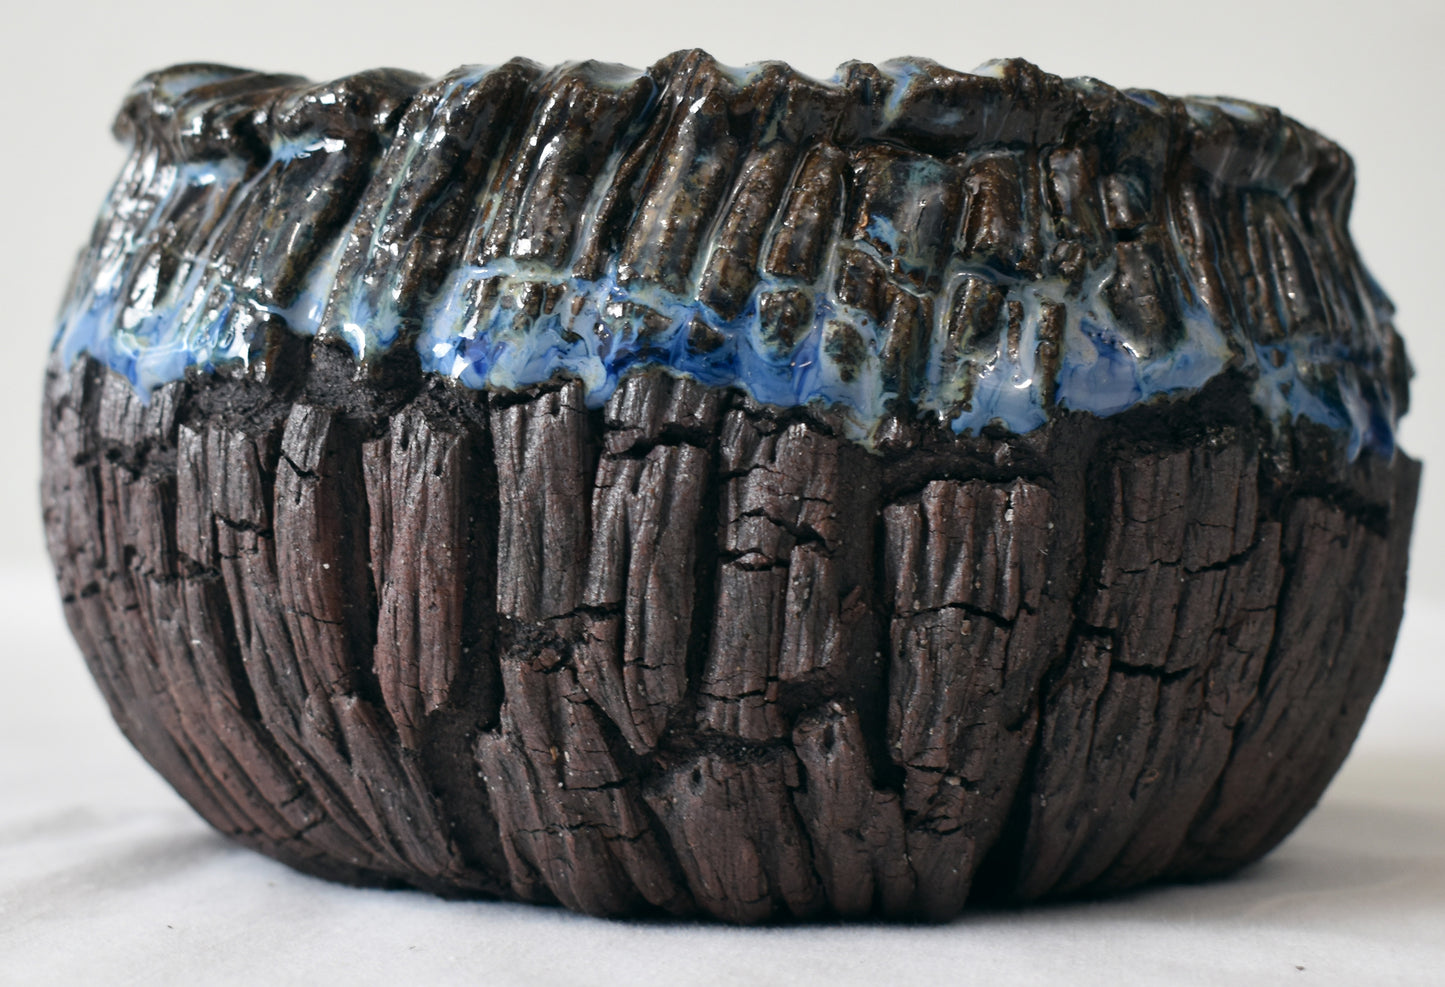 Spines.n.Clay Handmade Artisan Ceramic Pottery